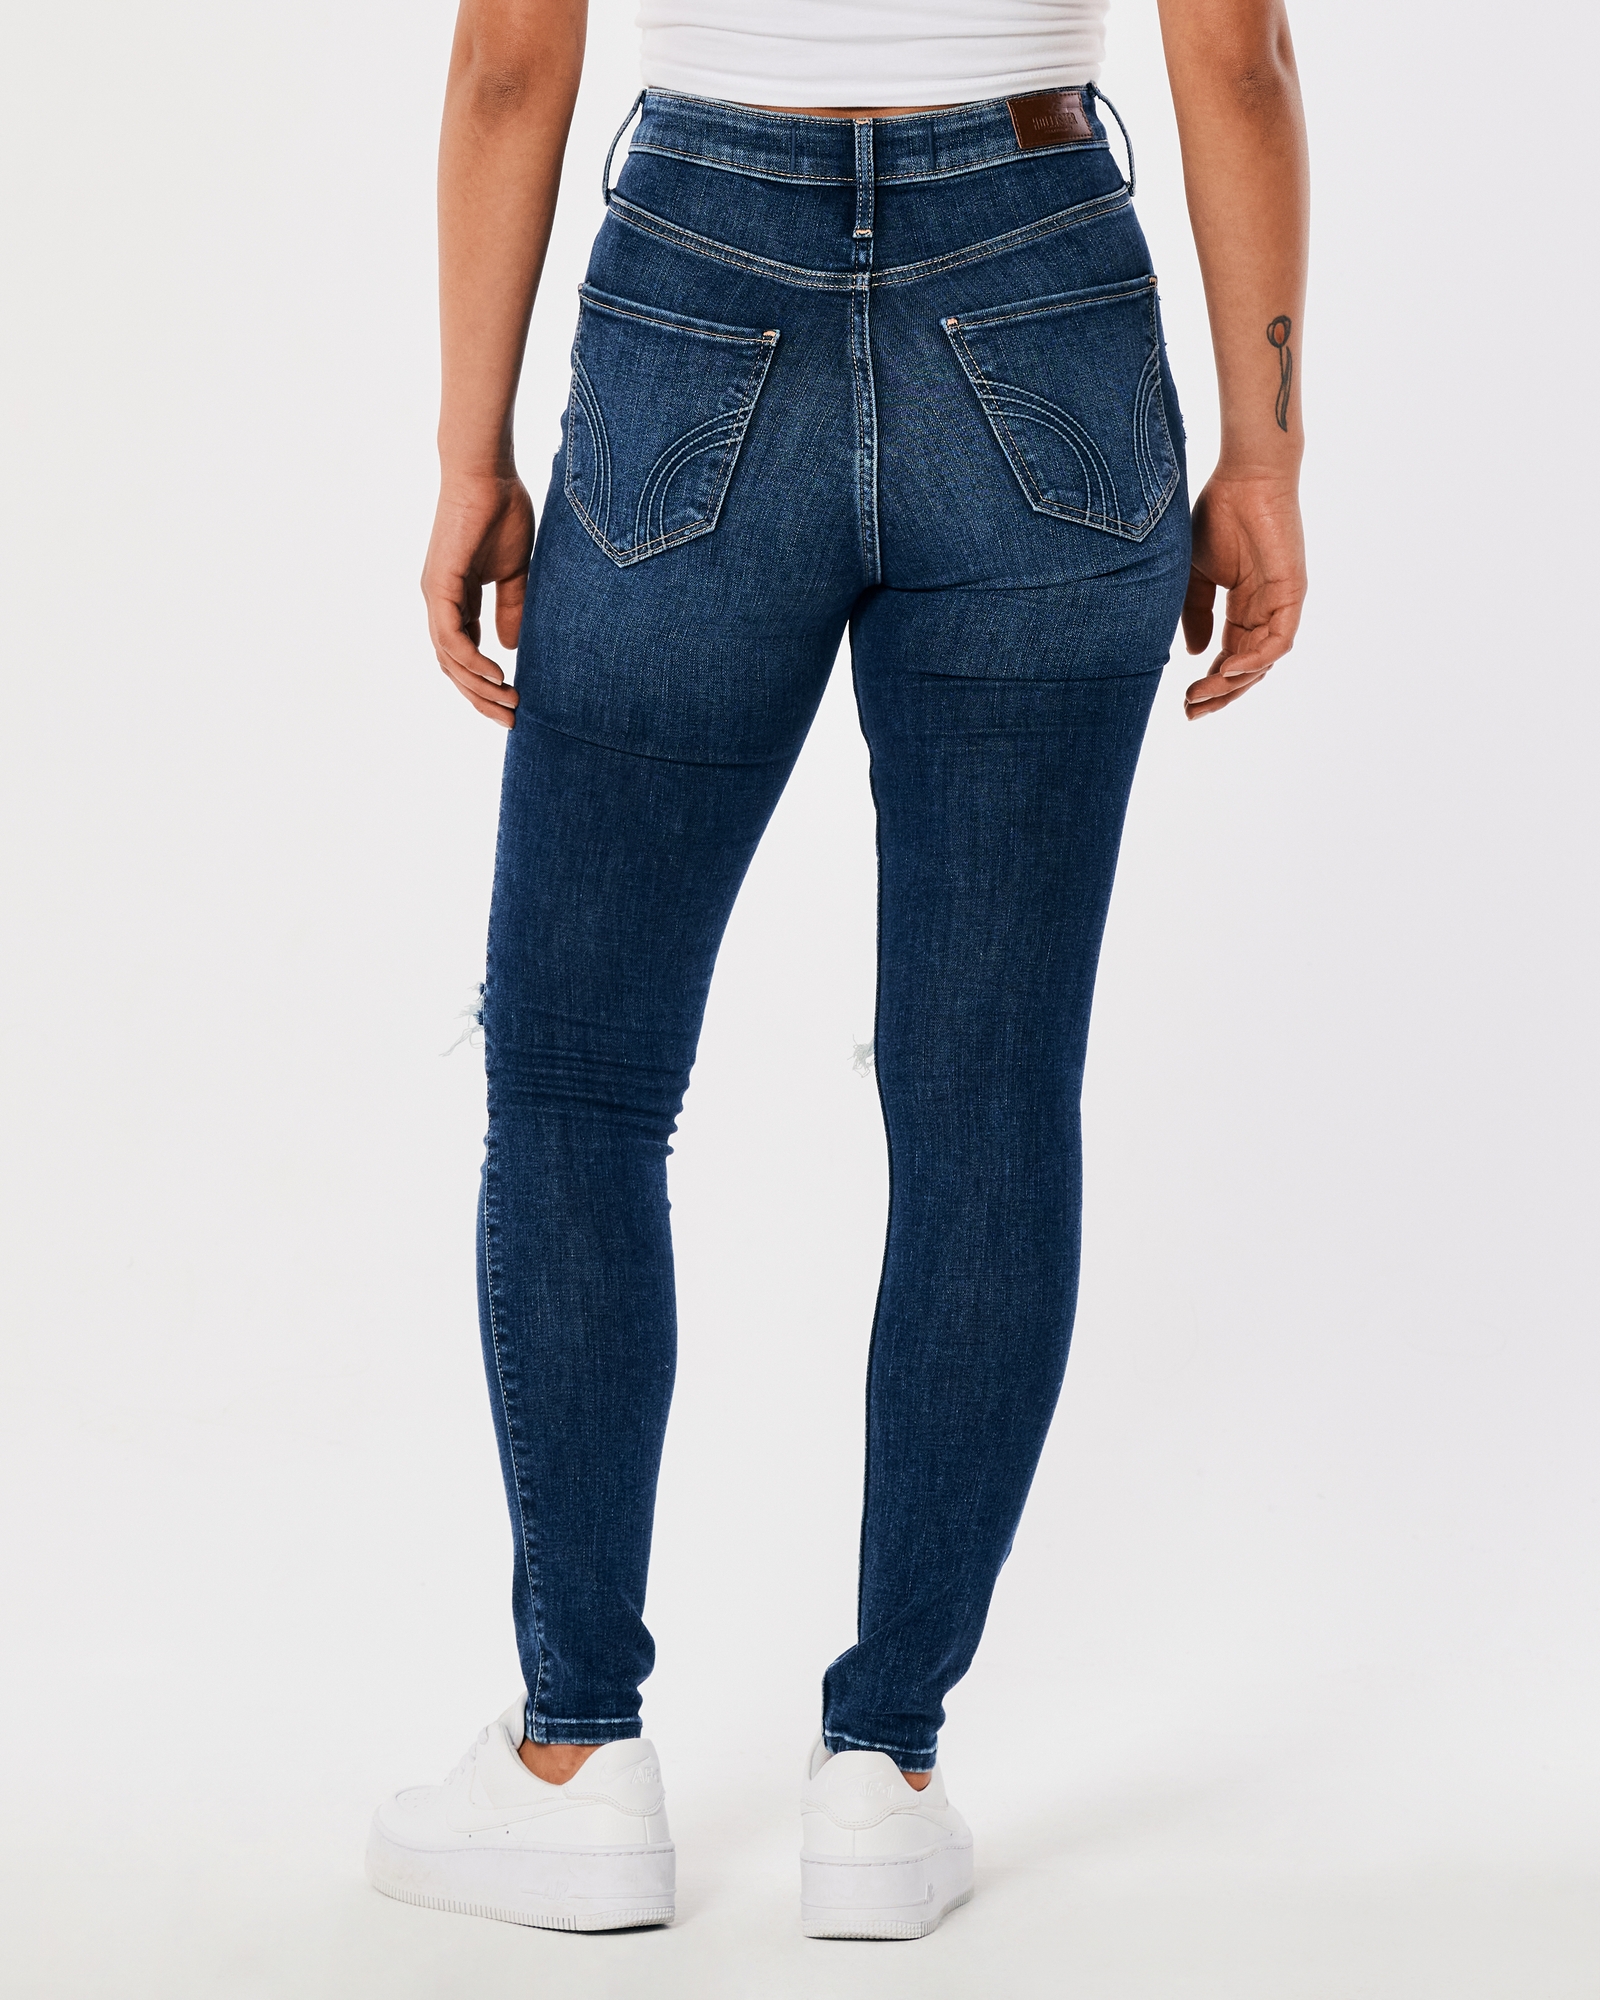 Hollister Womens 9R Skinny Fit Skinny Jeans Denim